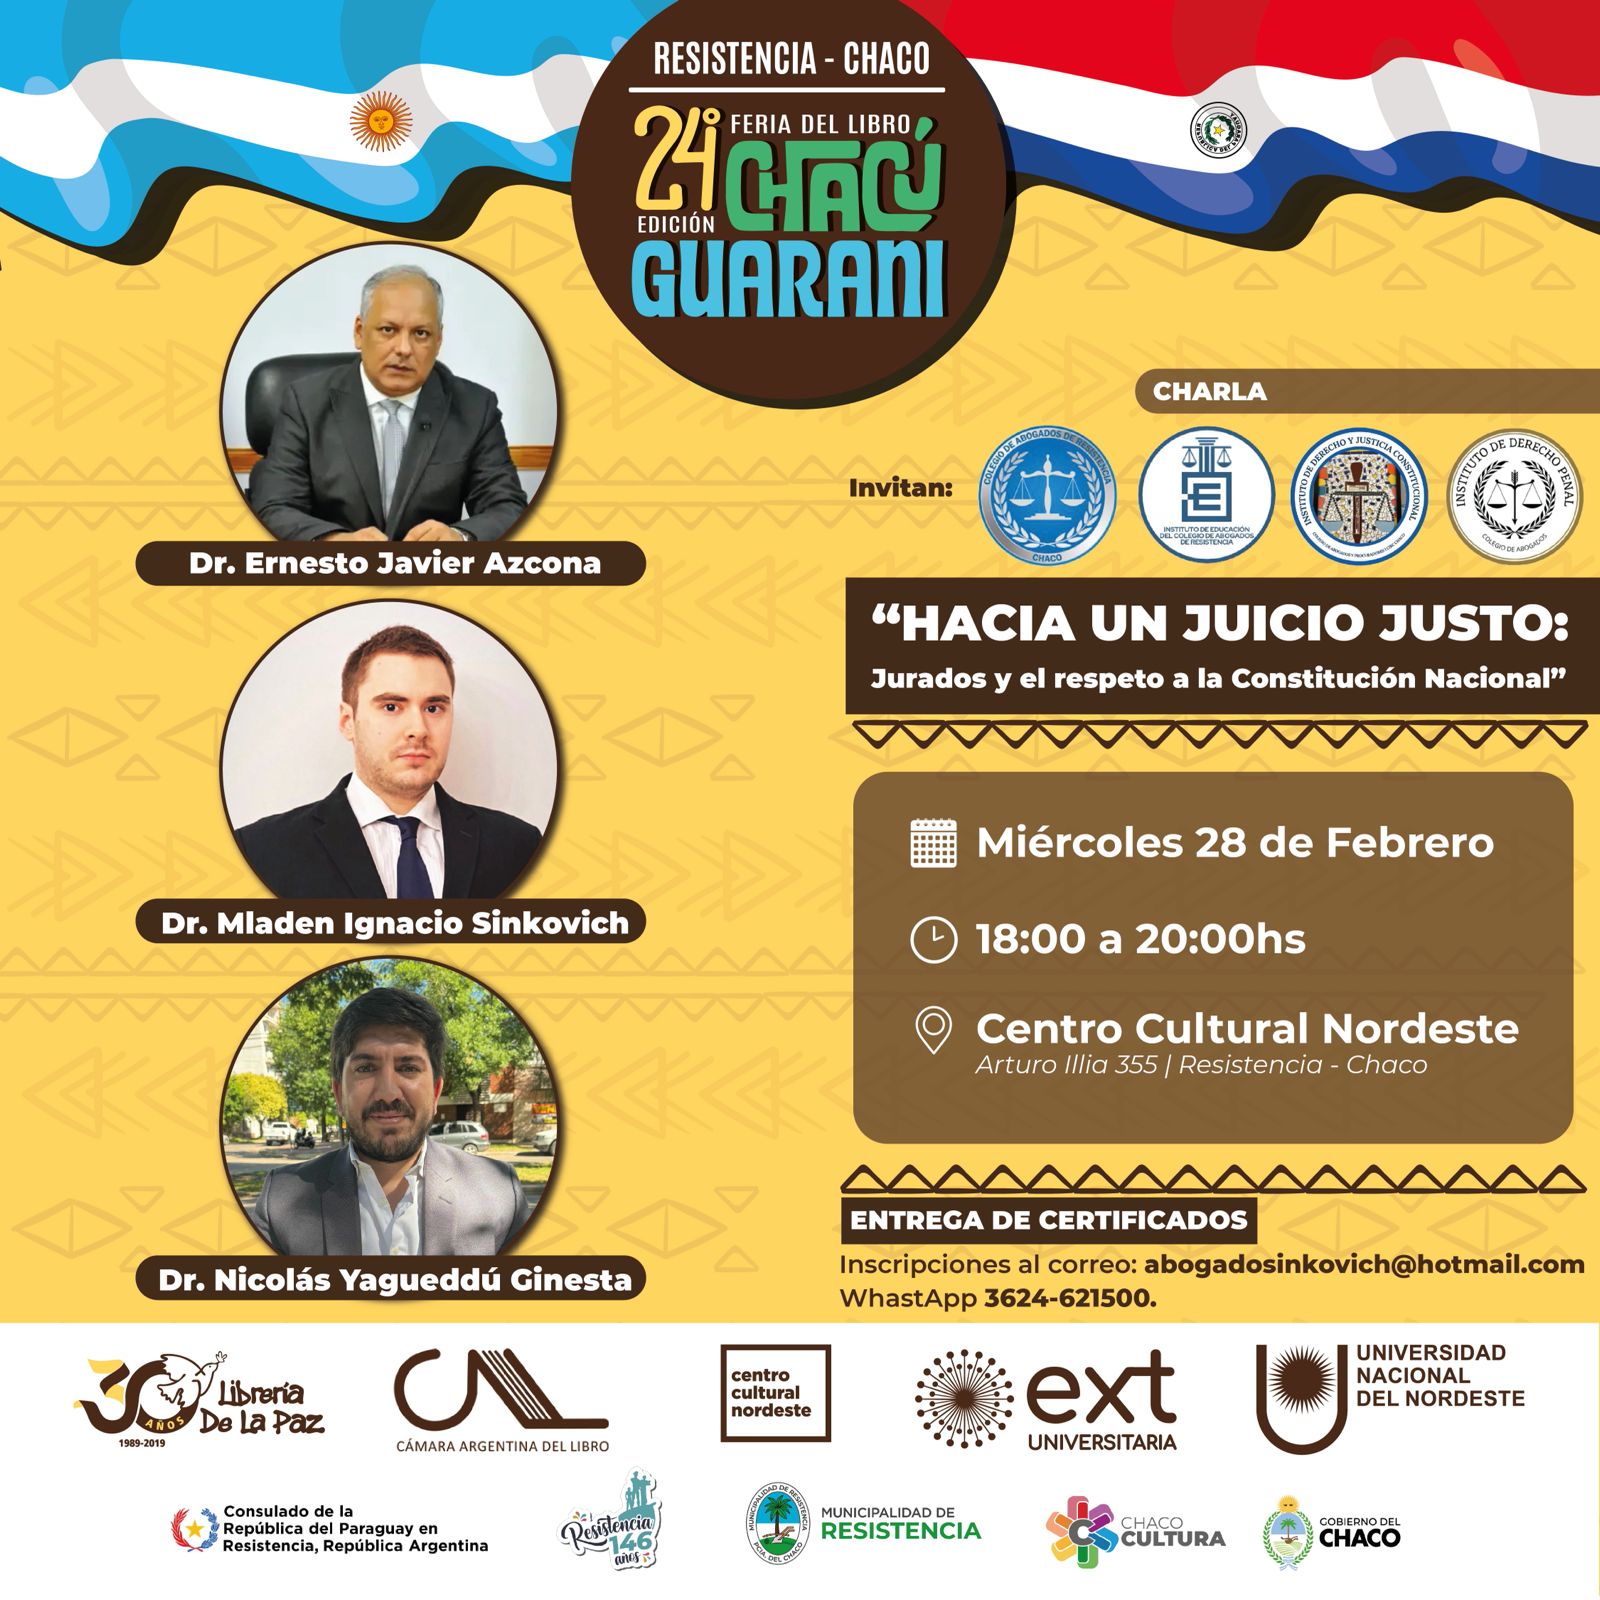 Feria del Libro Chacú Guarani se realizara este miercoles 28 de febrero